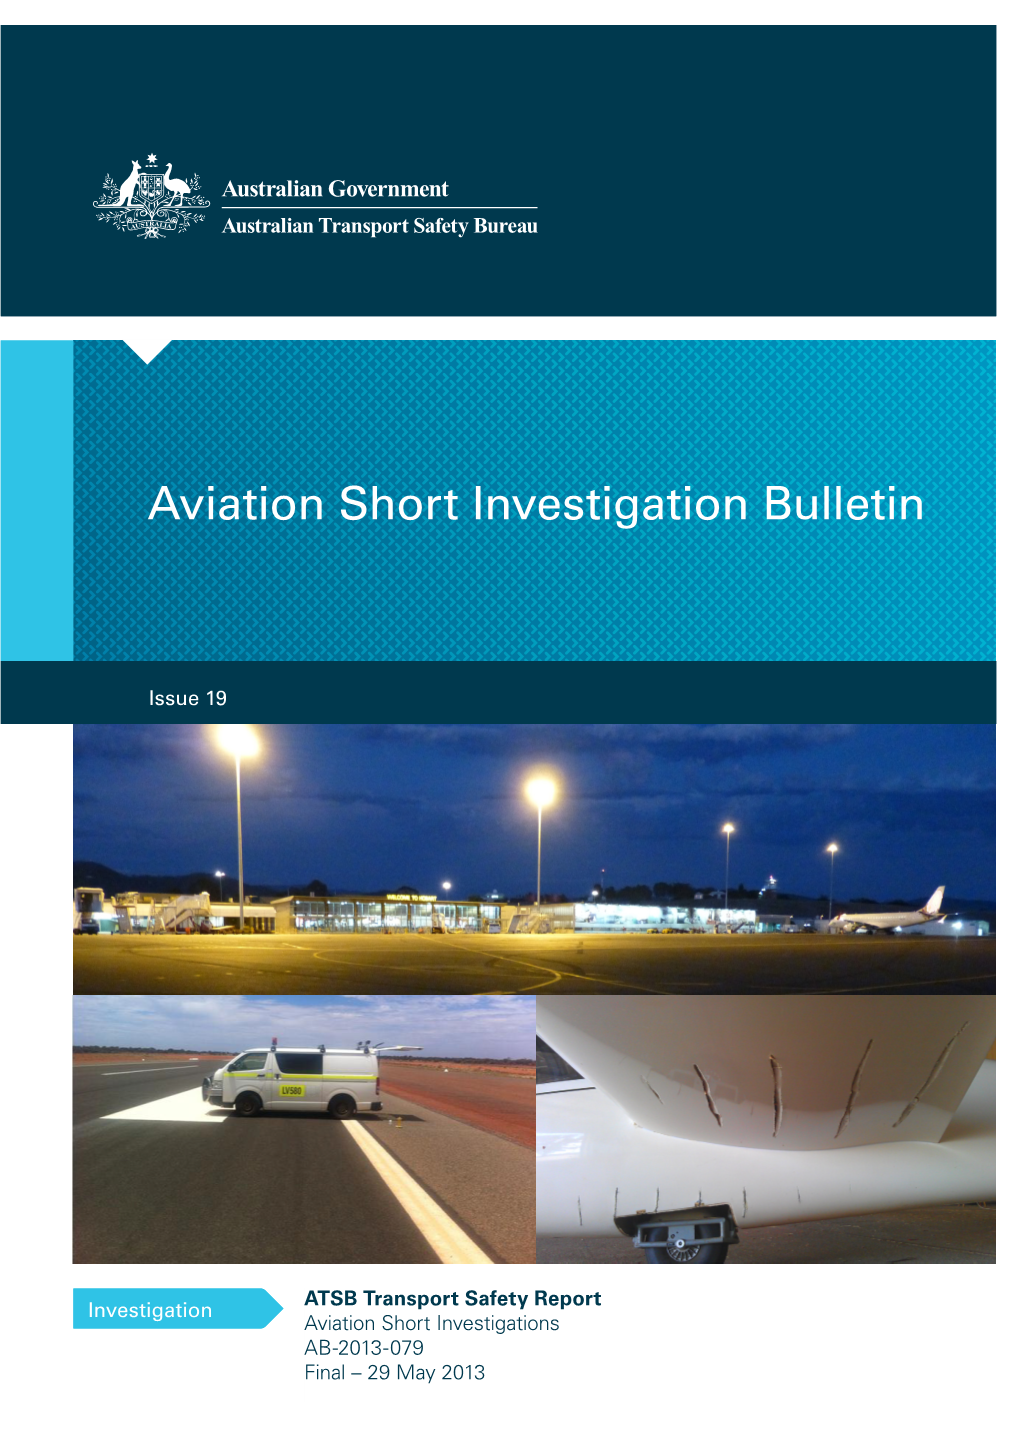 Aviation Short Investigation Bulletin Issue 19 AB-2013-079 Final – 29 May 2013